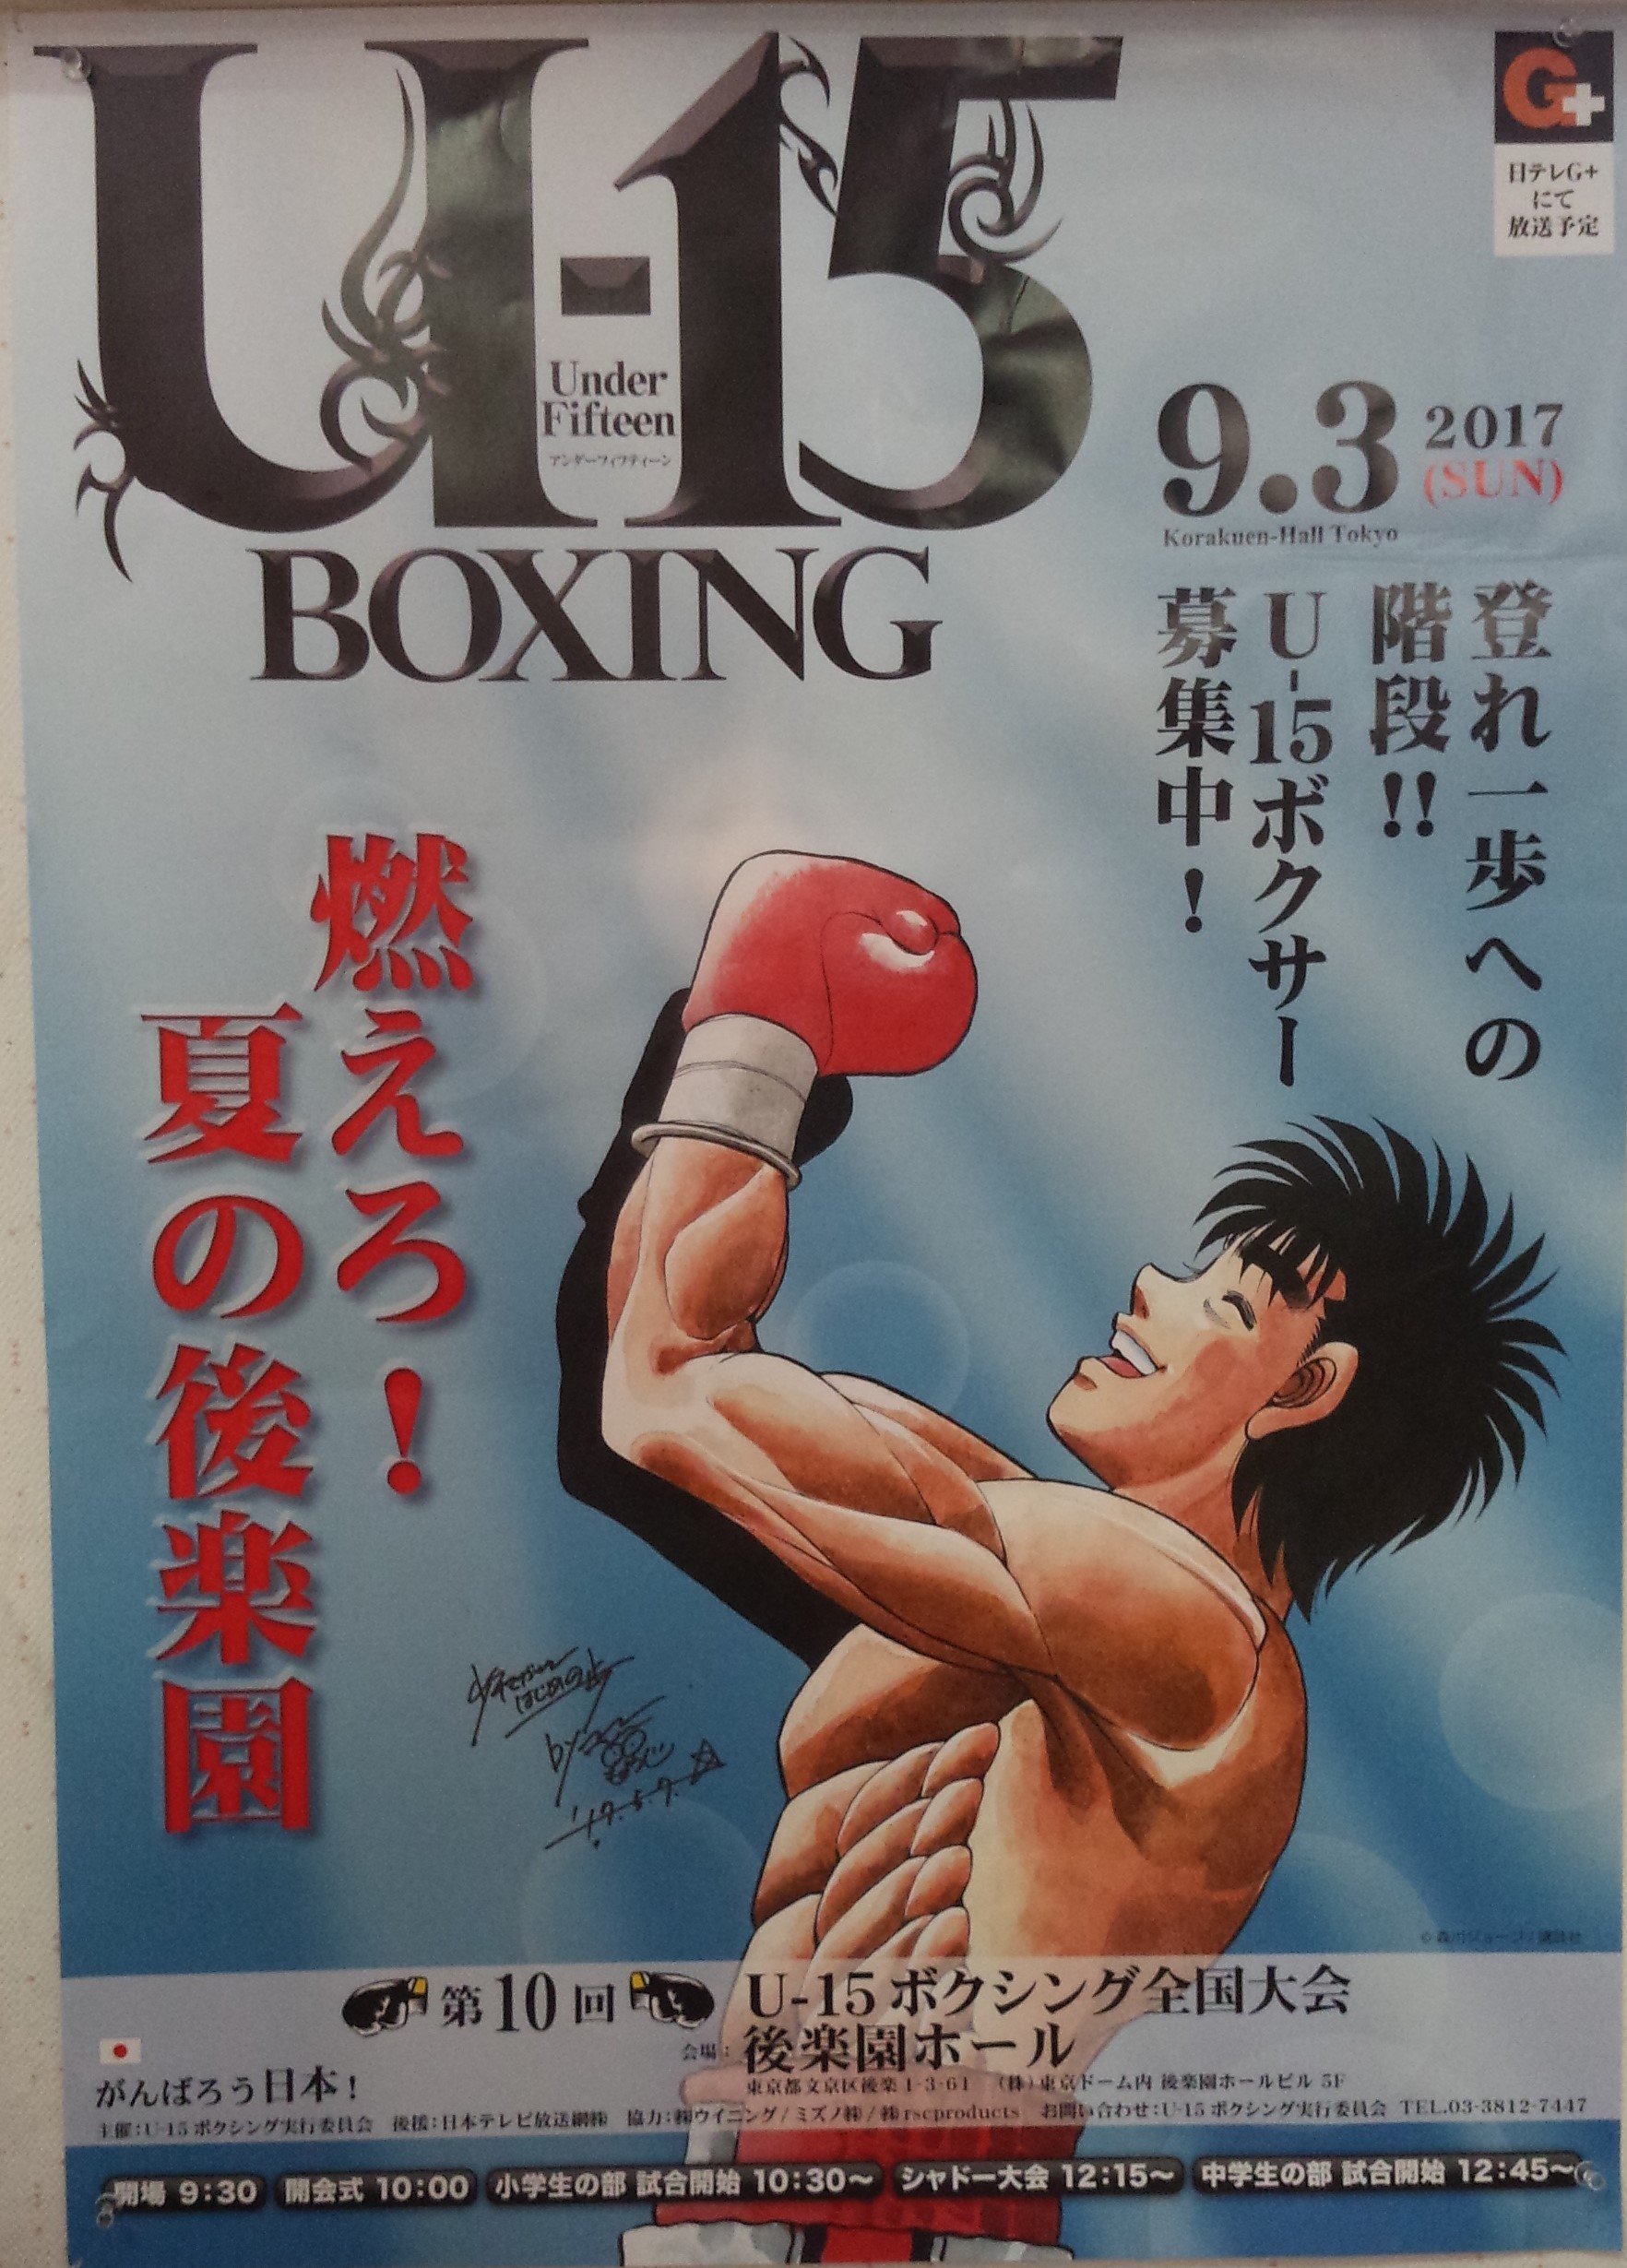 U １５ 西部日本予選決勝戦試合結果 Yuko Fitness Boxing Gym ユーケーオー フィットネス ボクシング ジム 福岡 博多 黒木 優子